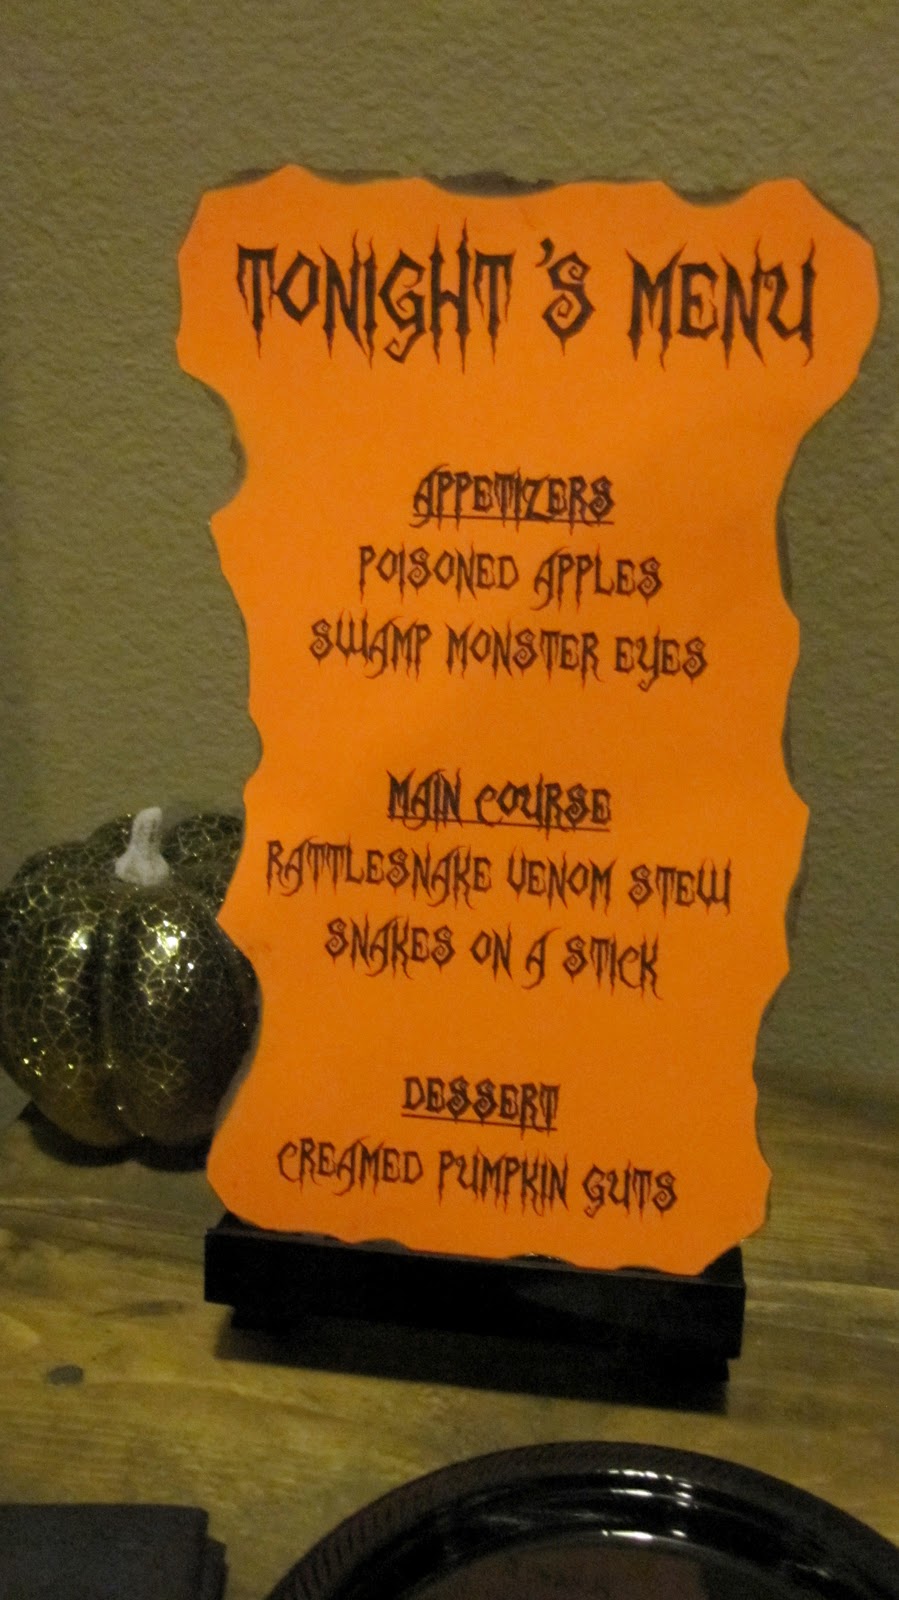 Halloween dinner party menu. 